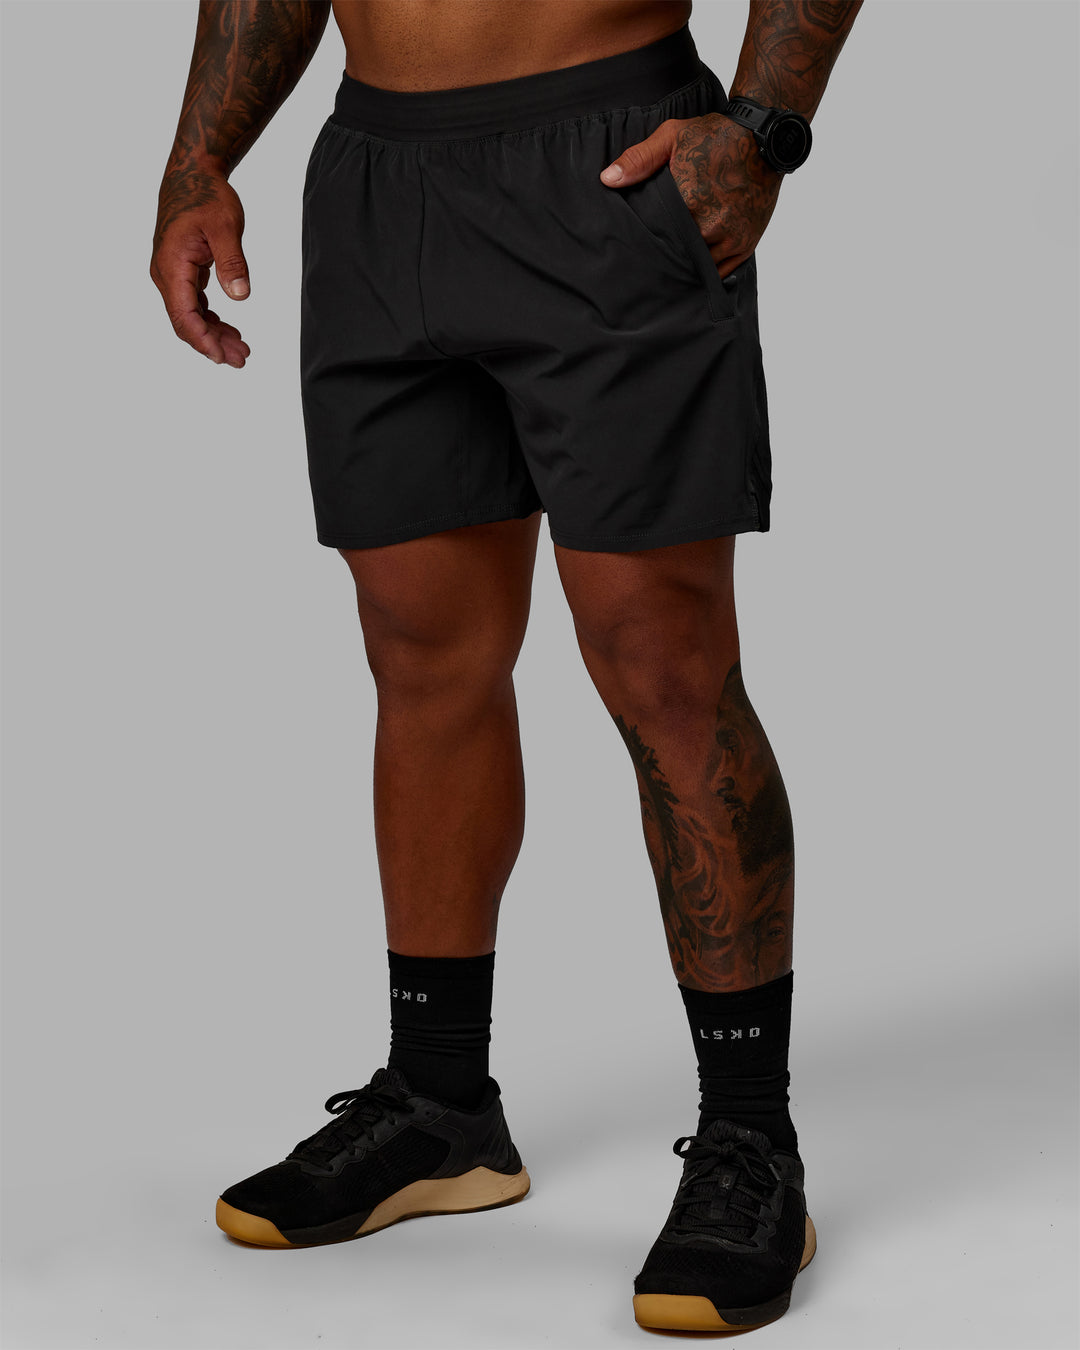 Man wearing Challenger 6" Performance Shorts - Pirate Black